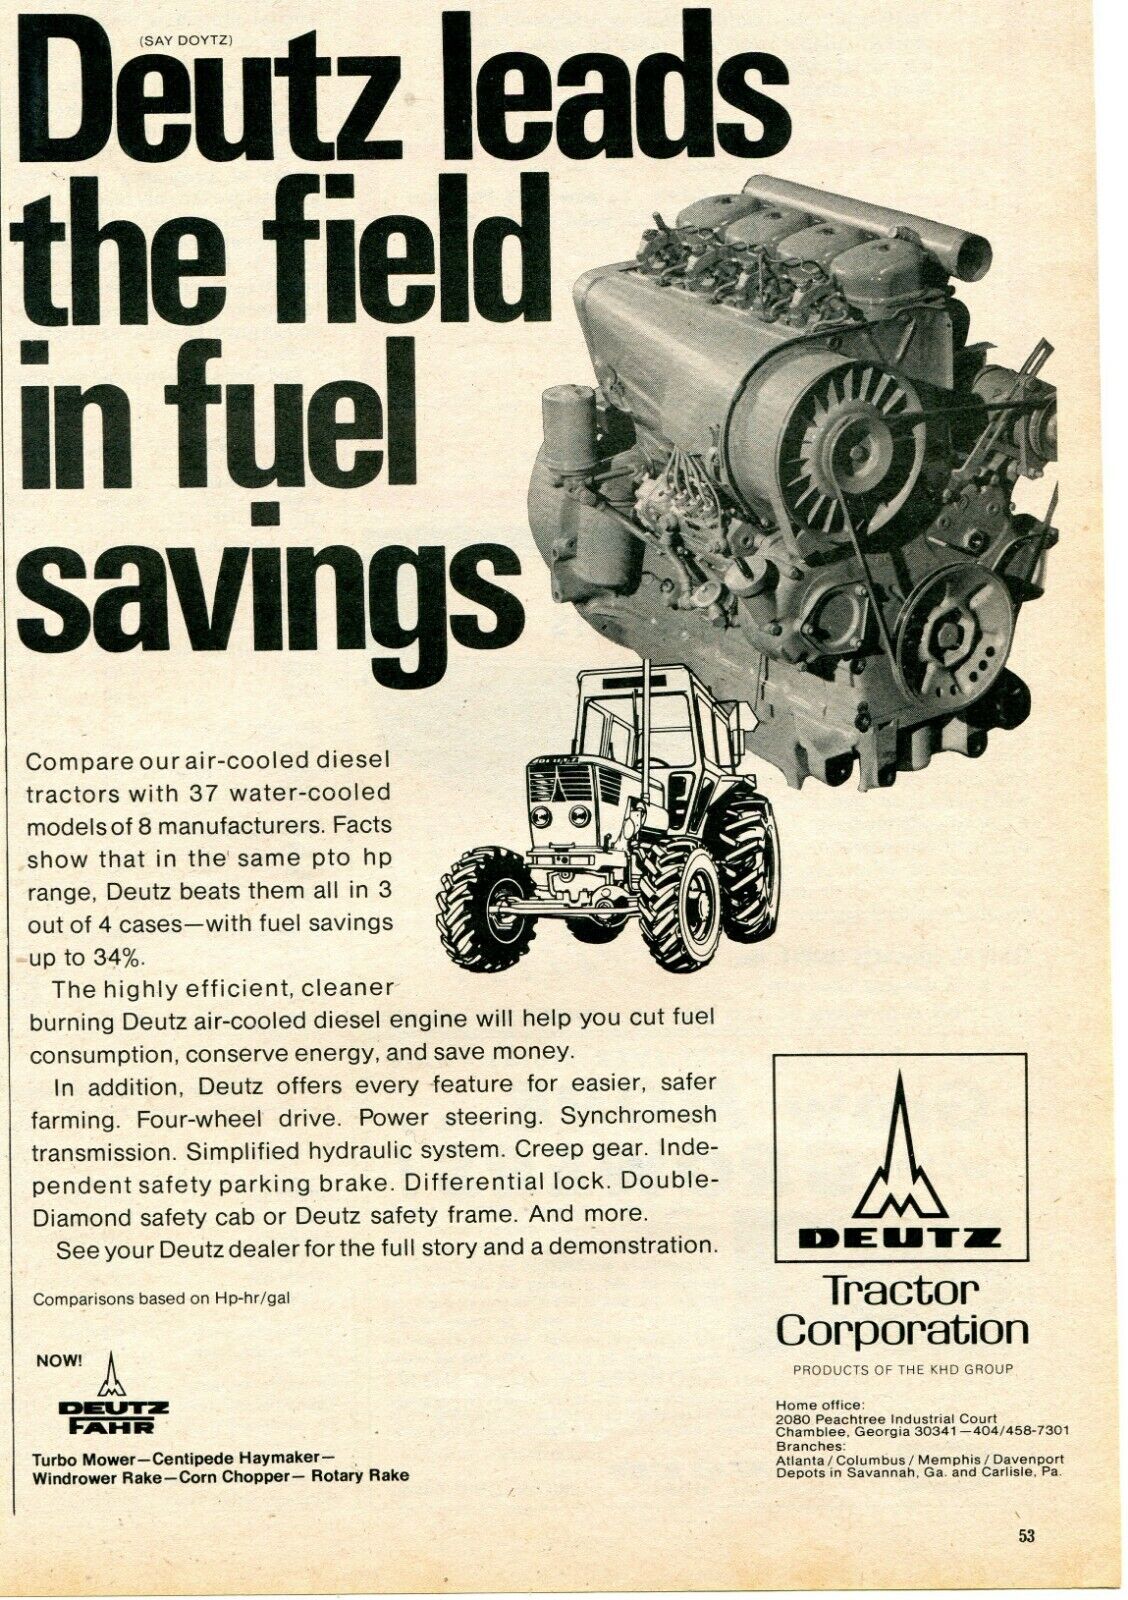 1974 Print Ad of Deutz Air-Cooled Farm Tractor